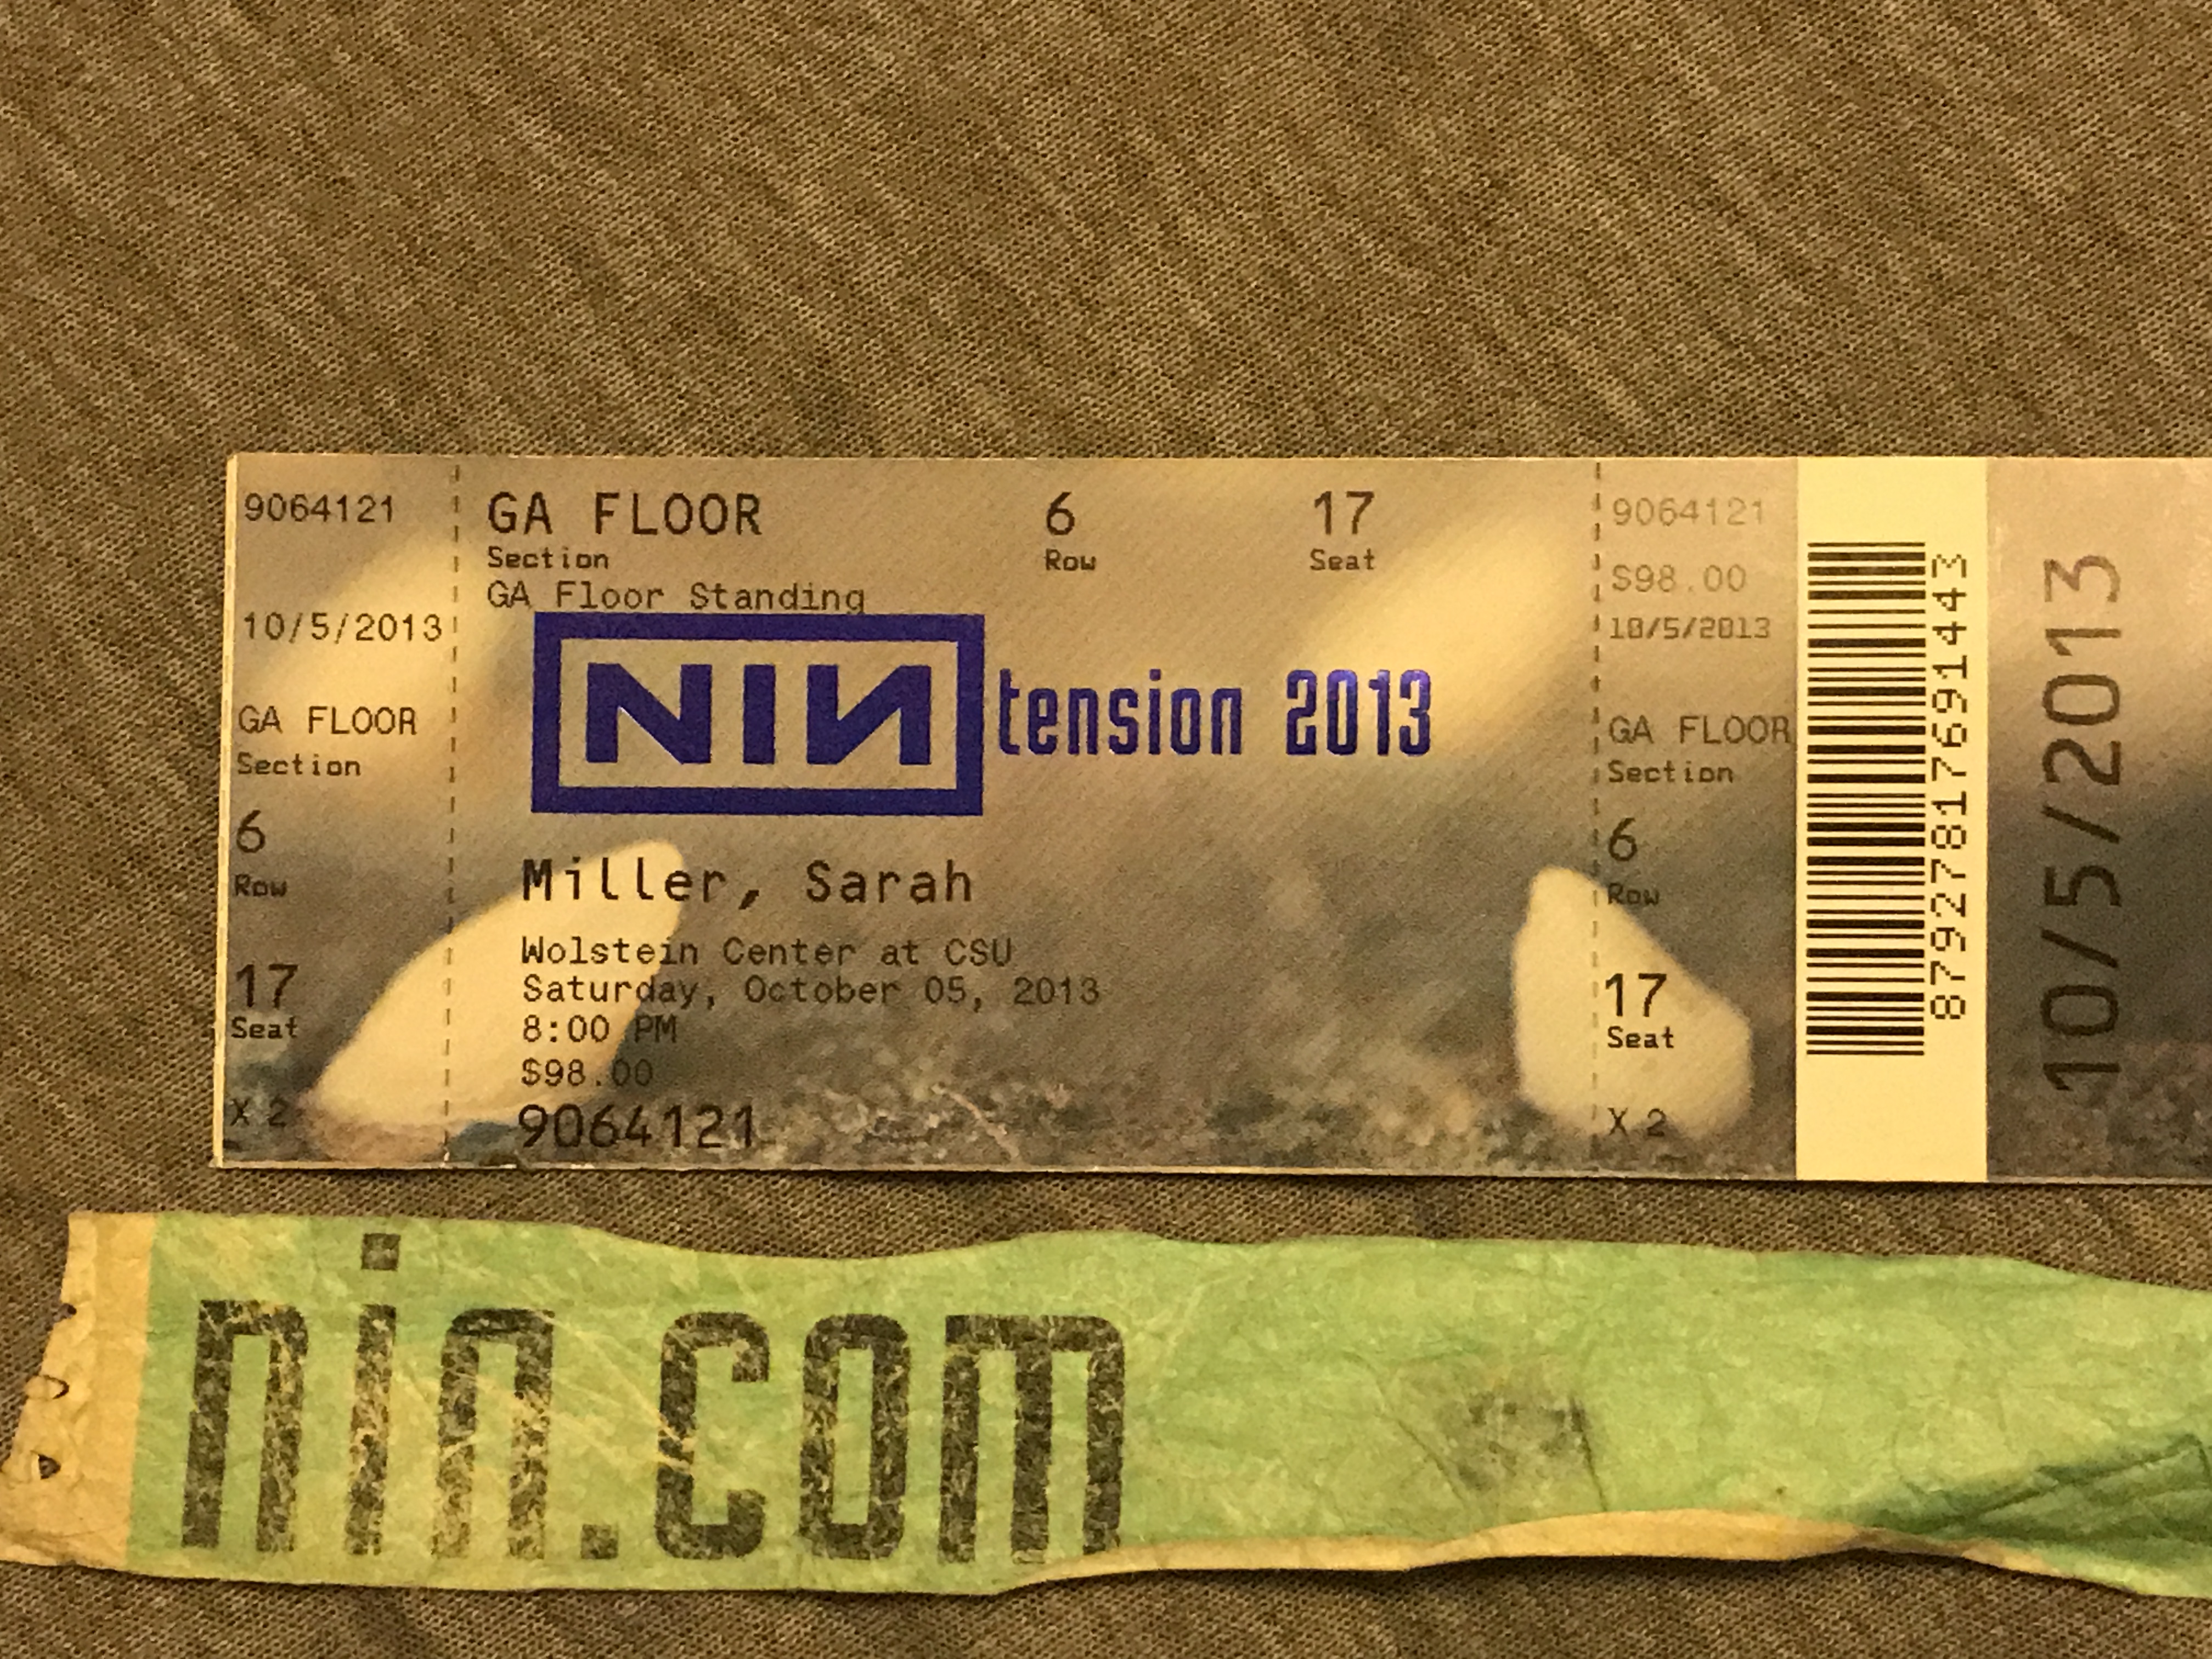 2013/10/05 Ticket